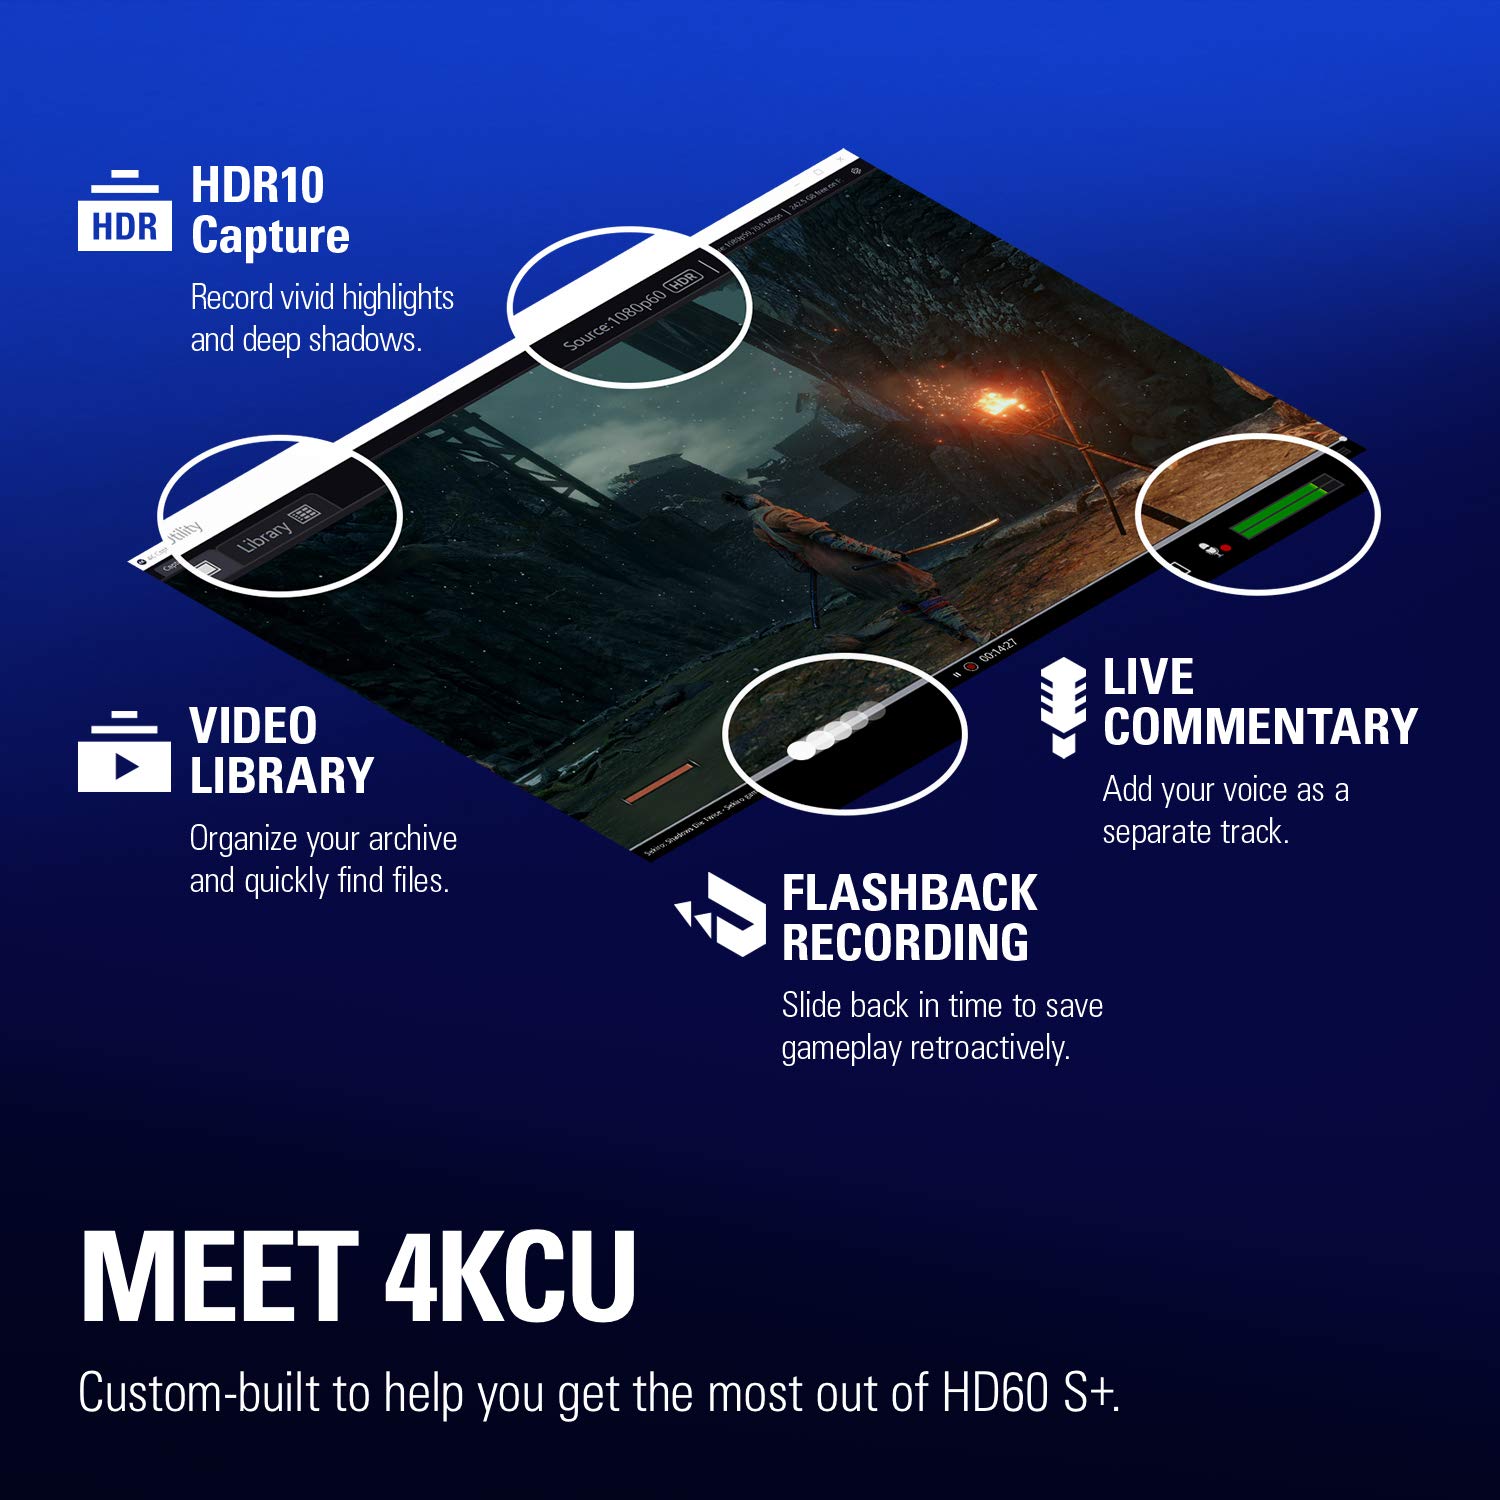 Elgato Game Capture HD60 S+ 1080p60 HDR10 Capture with 4K60 HDR10 Zero-Lag ของแท้ ประกันศูนย์ 1ปี